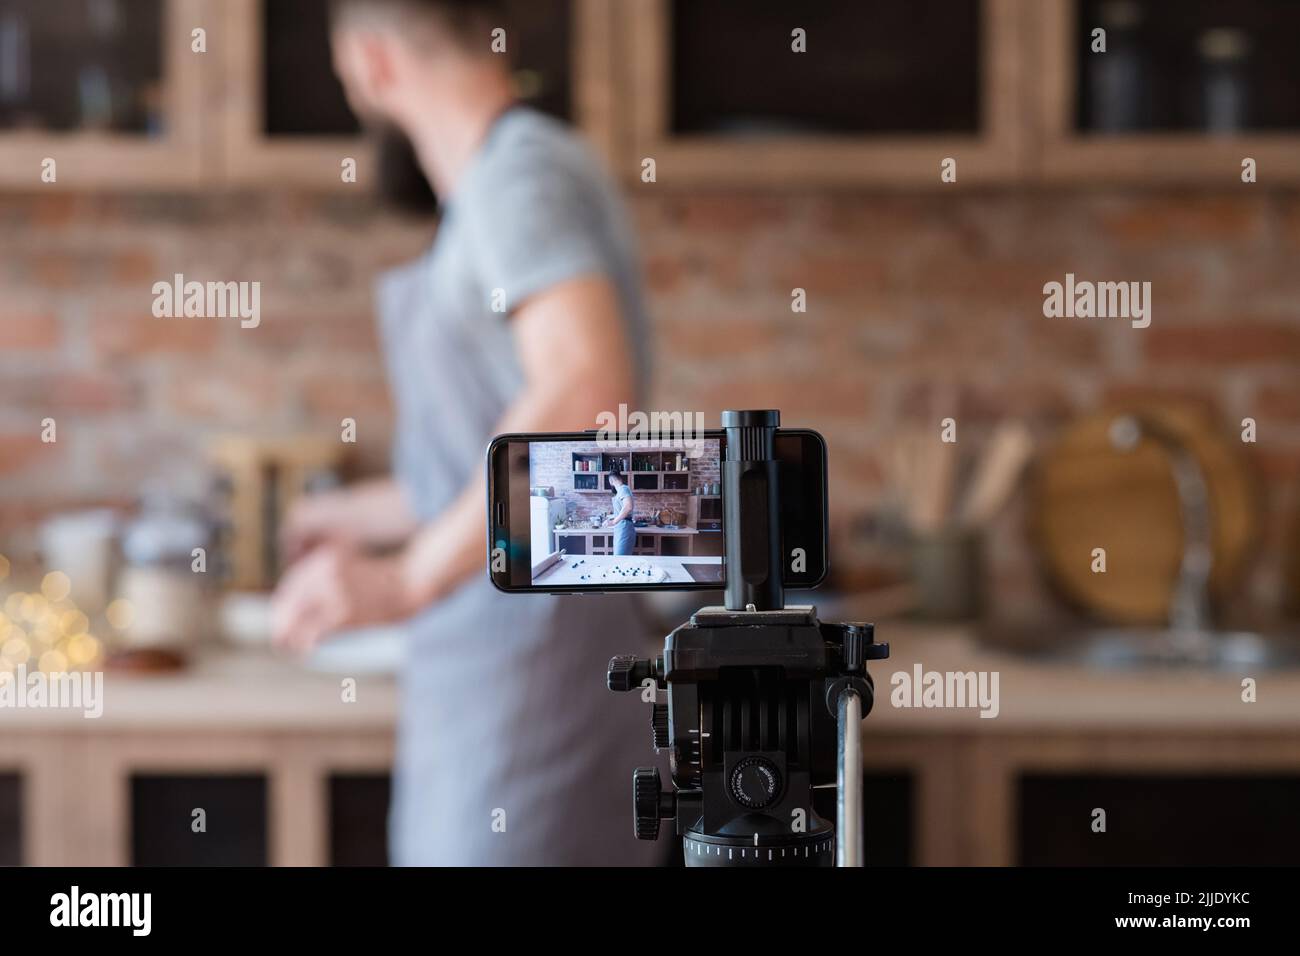 technology video stream phone camera man kitchen Stock Photo